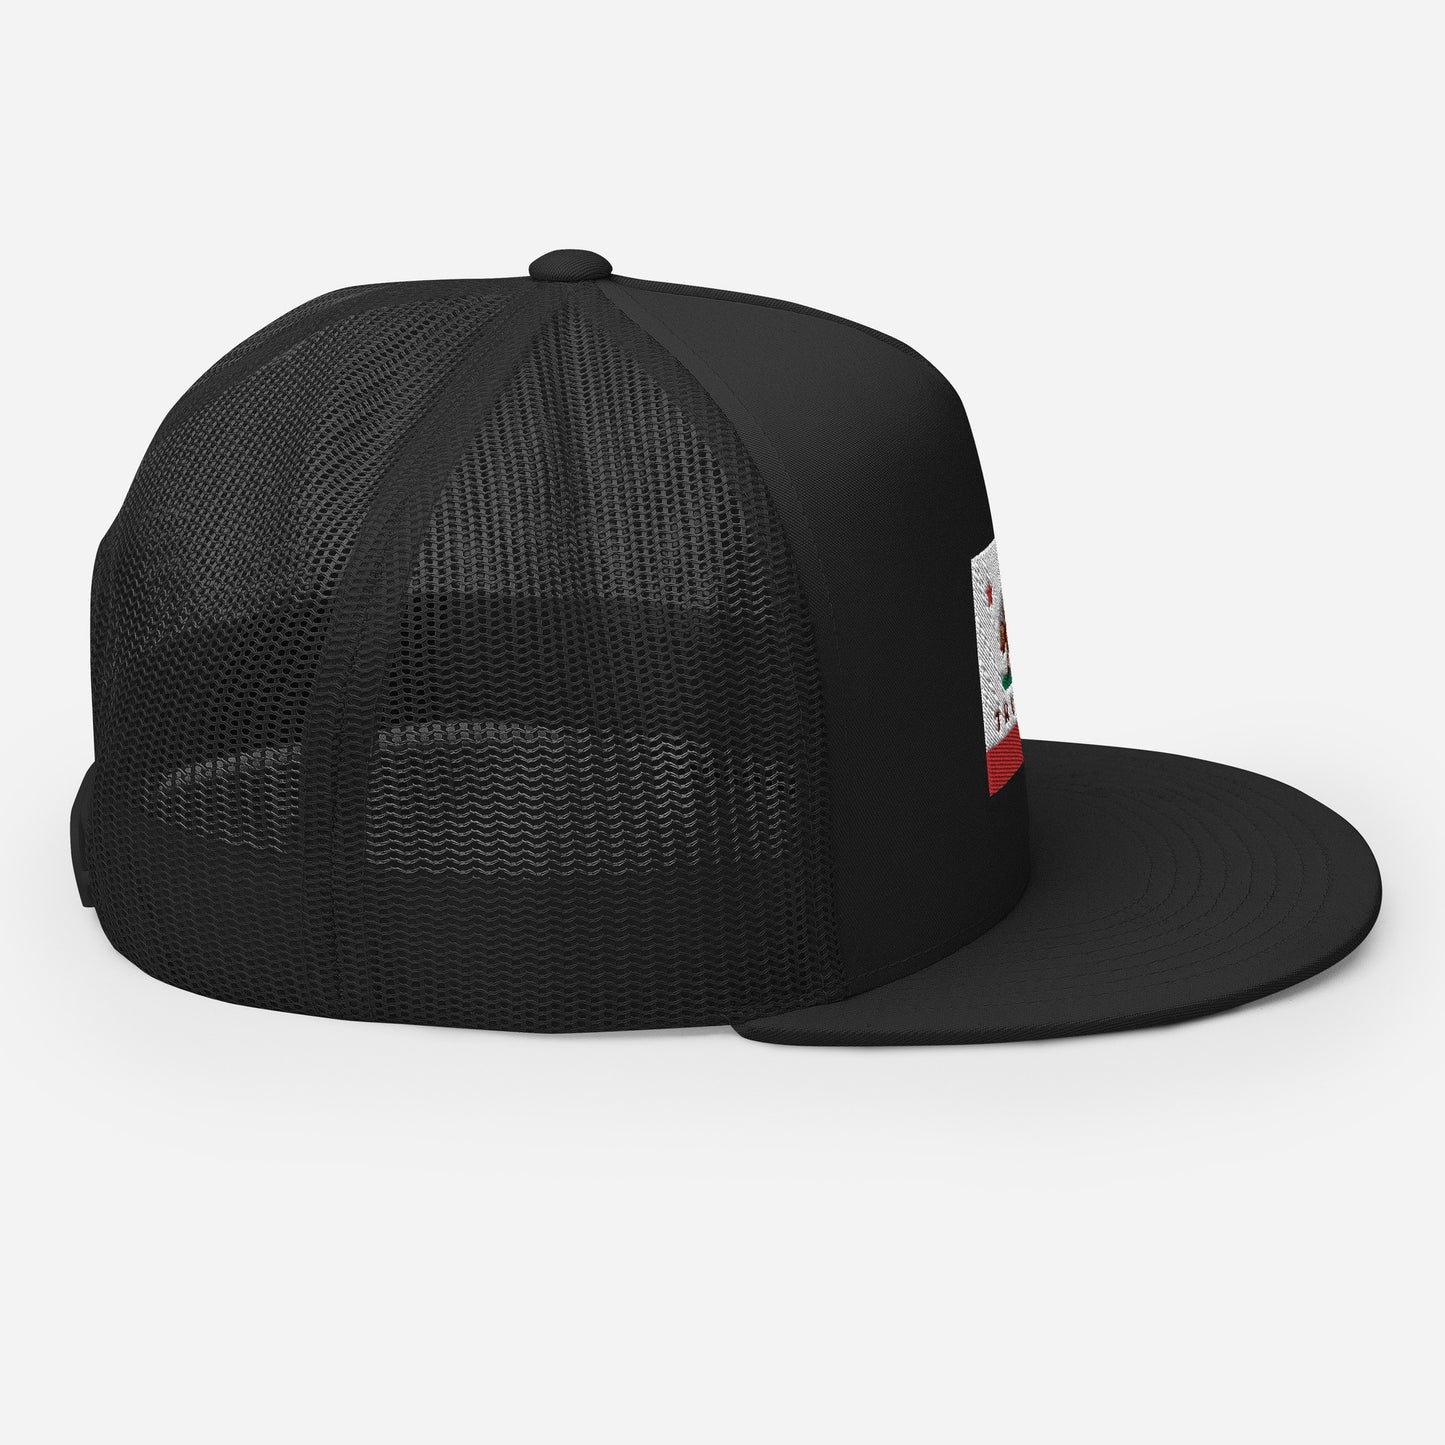 black mesh truckee hat